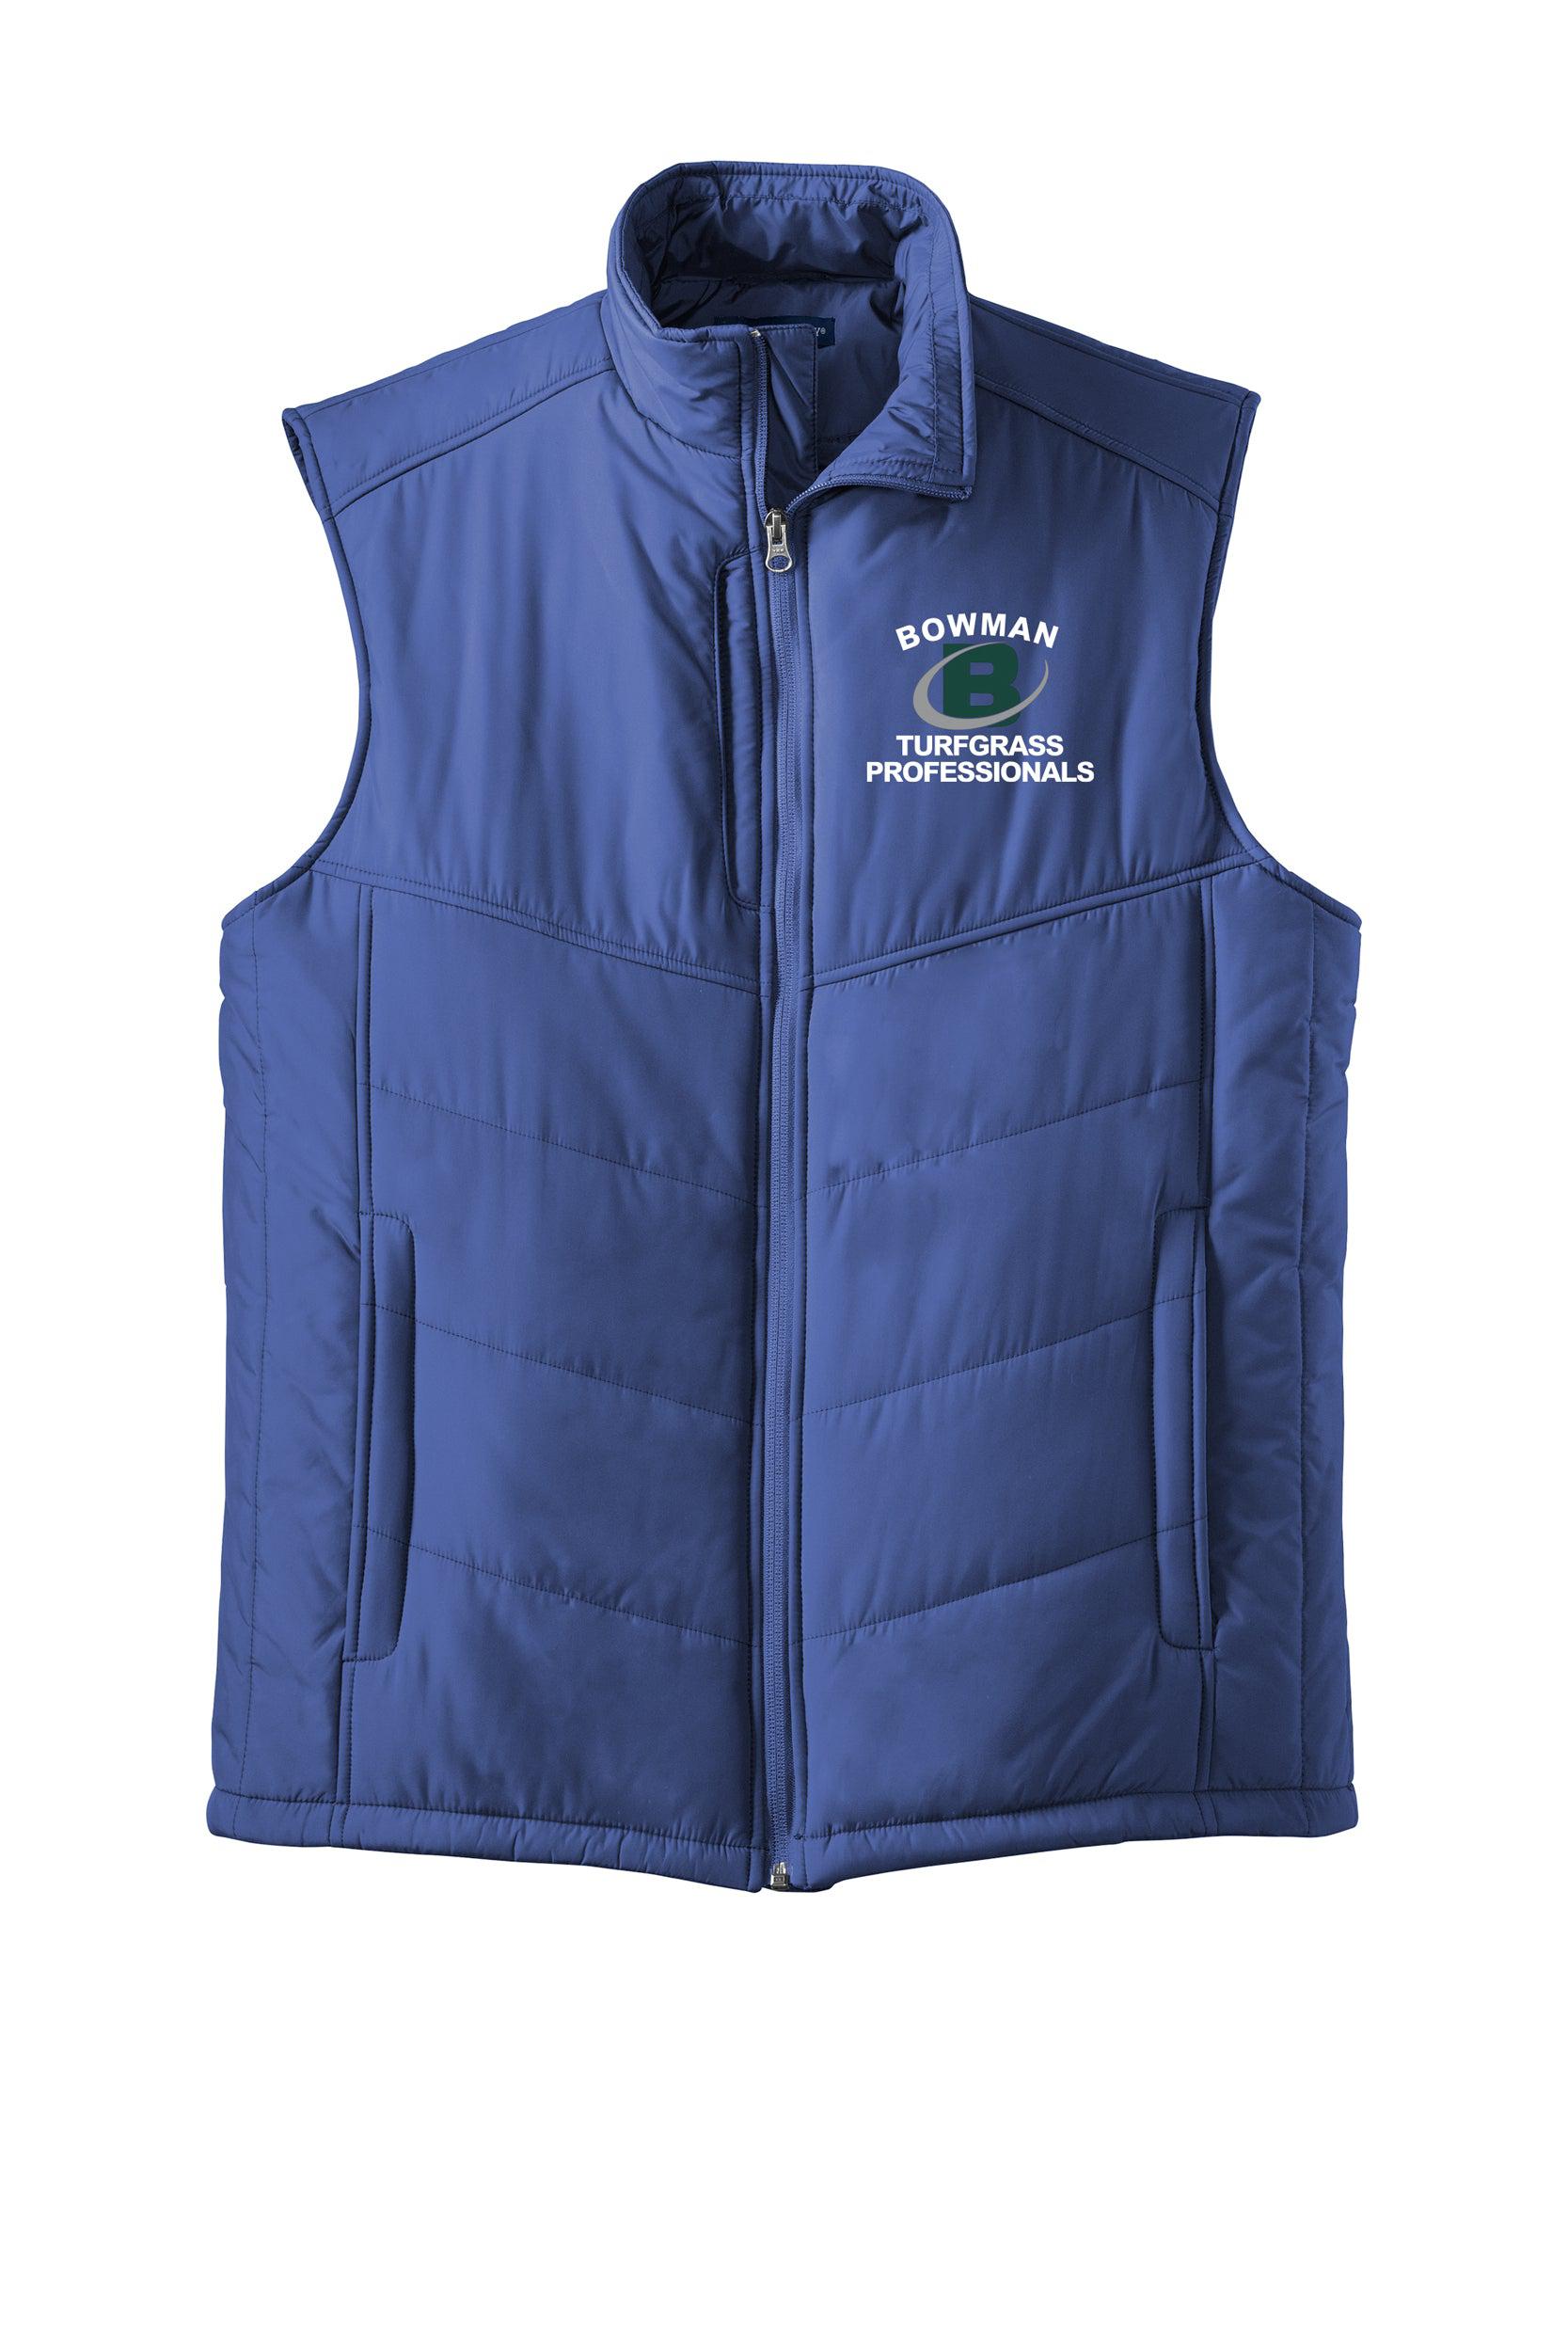 Bowman Turfgrass Professionals - Puffy Vest